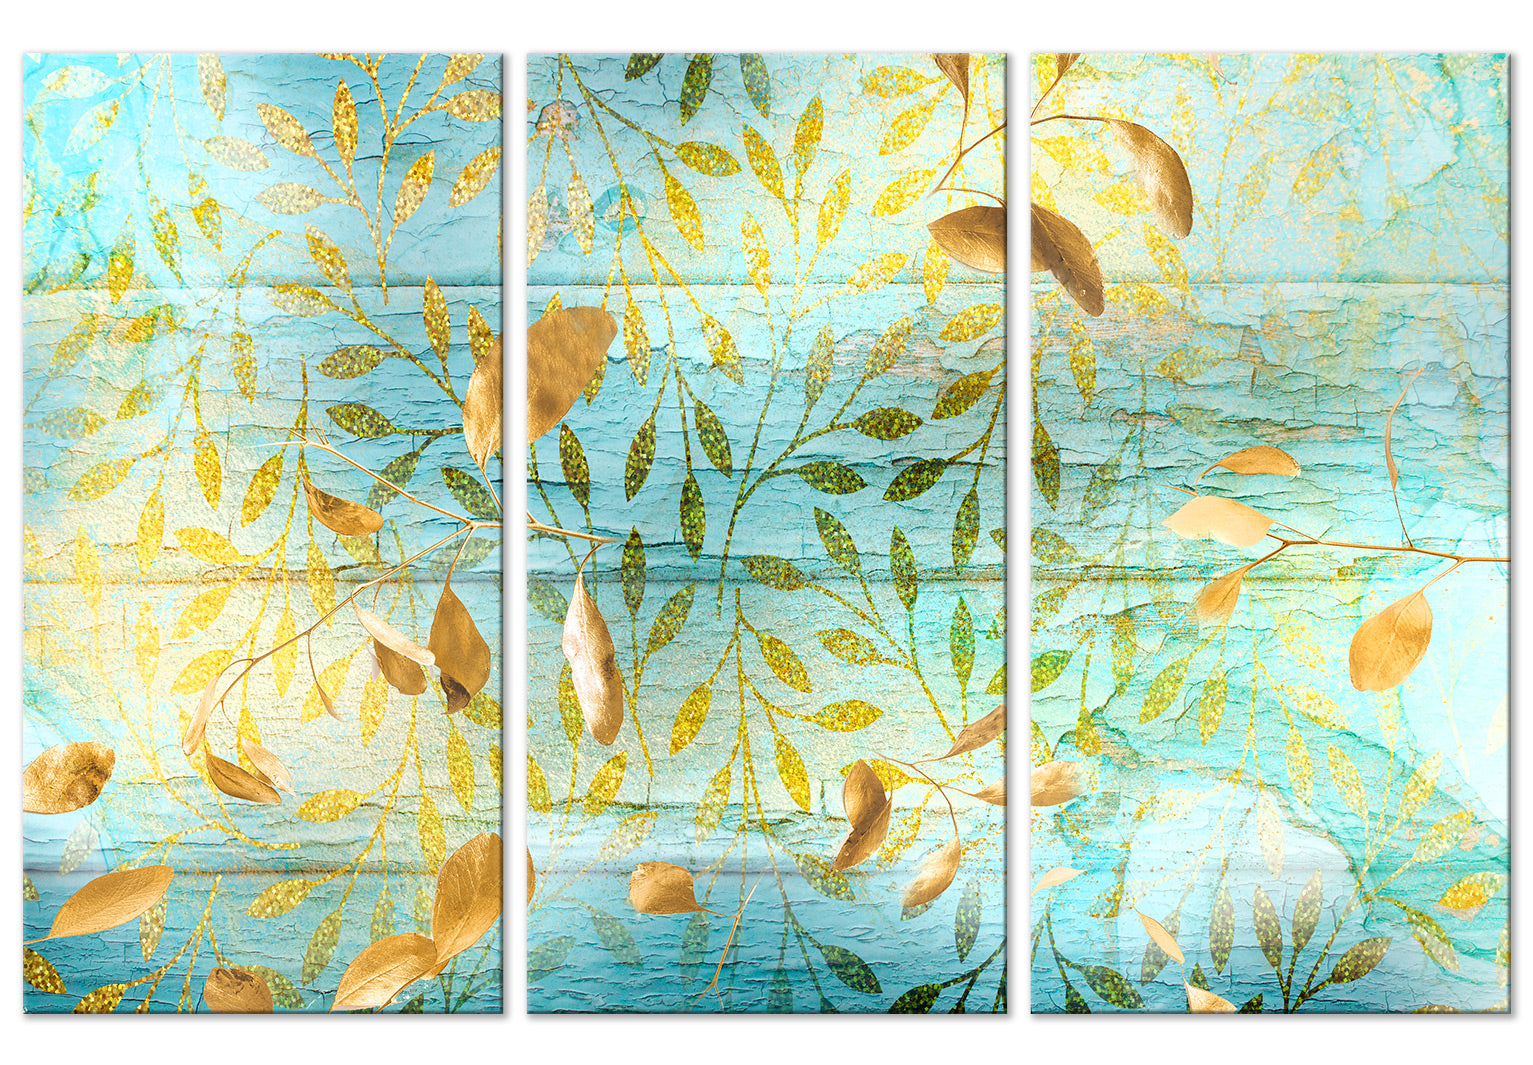 Botanical Canvas Wall Art - Golden Harvest - 3 Pieces